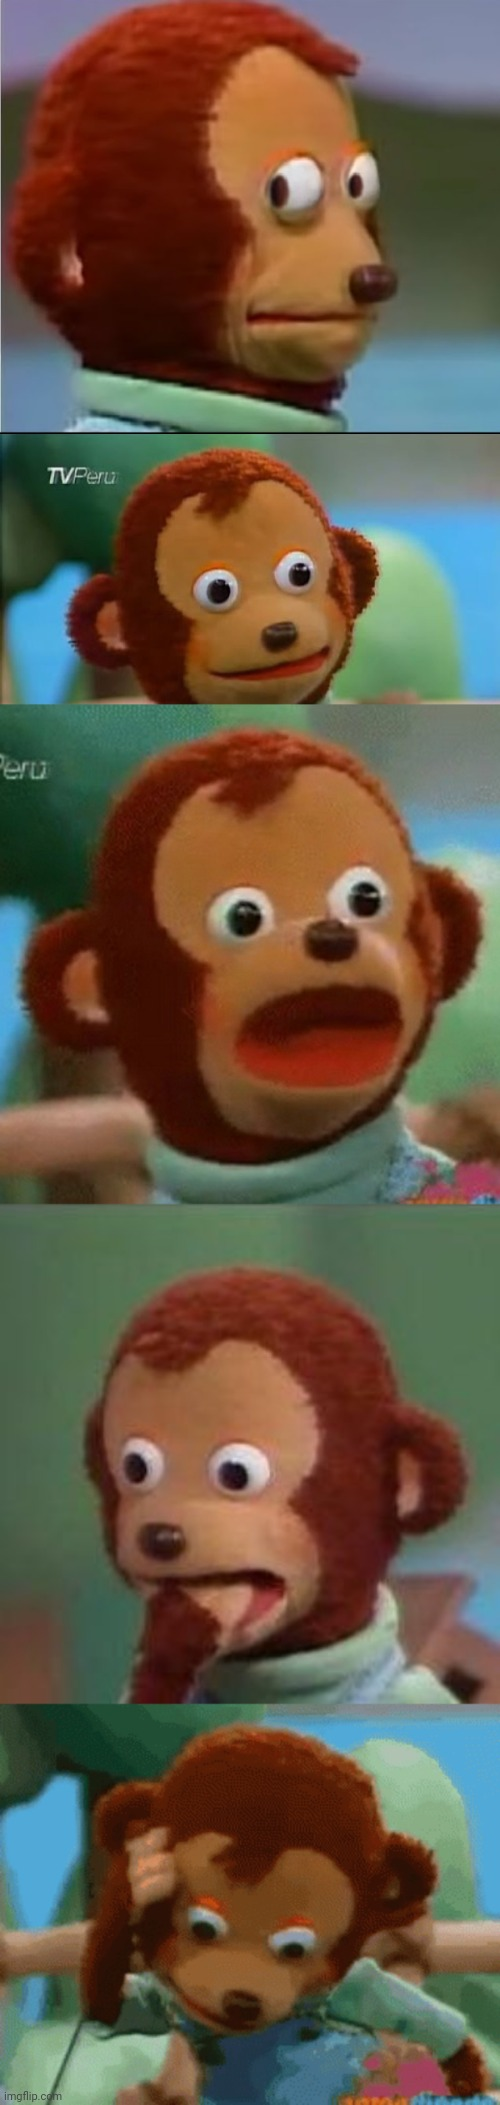 puppet Monkey looking away Meme Generator - Piñata Farms - The best meme  generator and meme maker for video & image memes